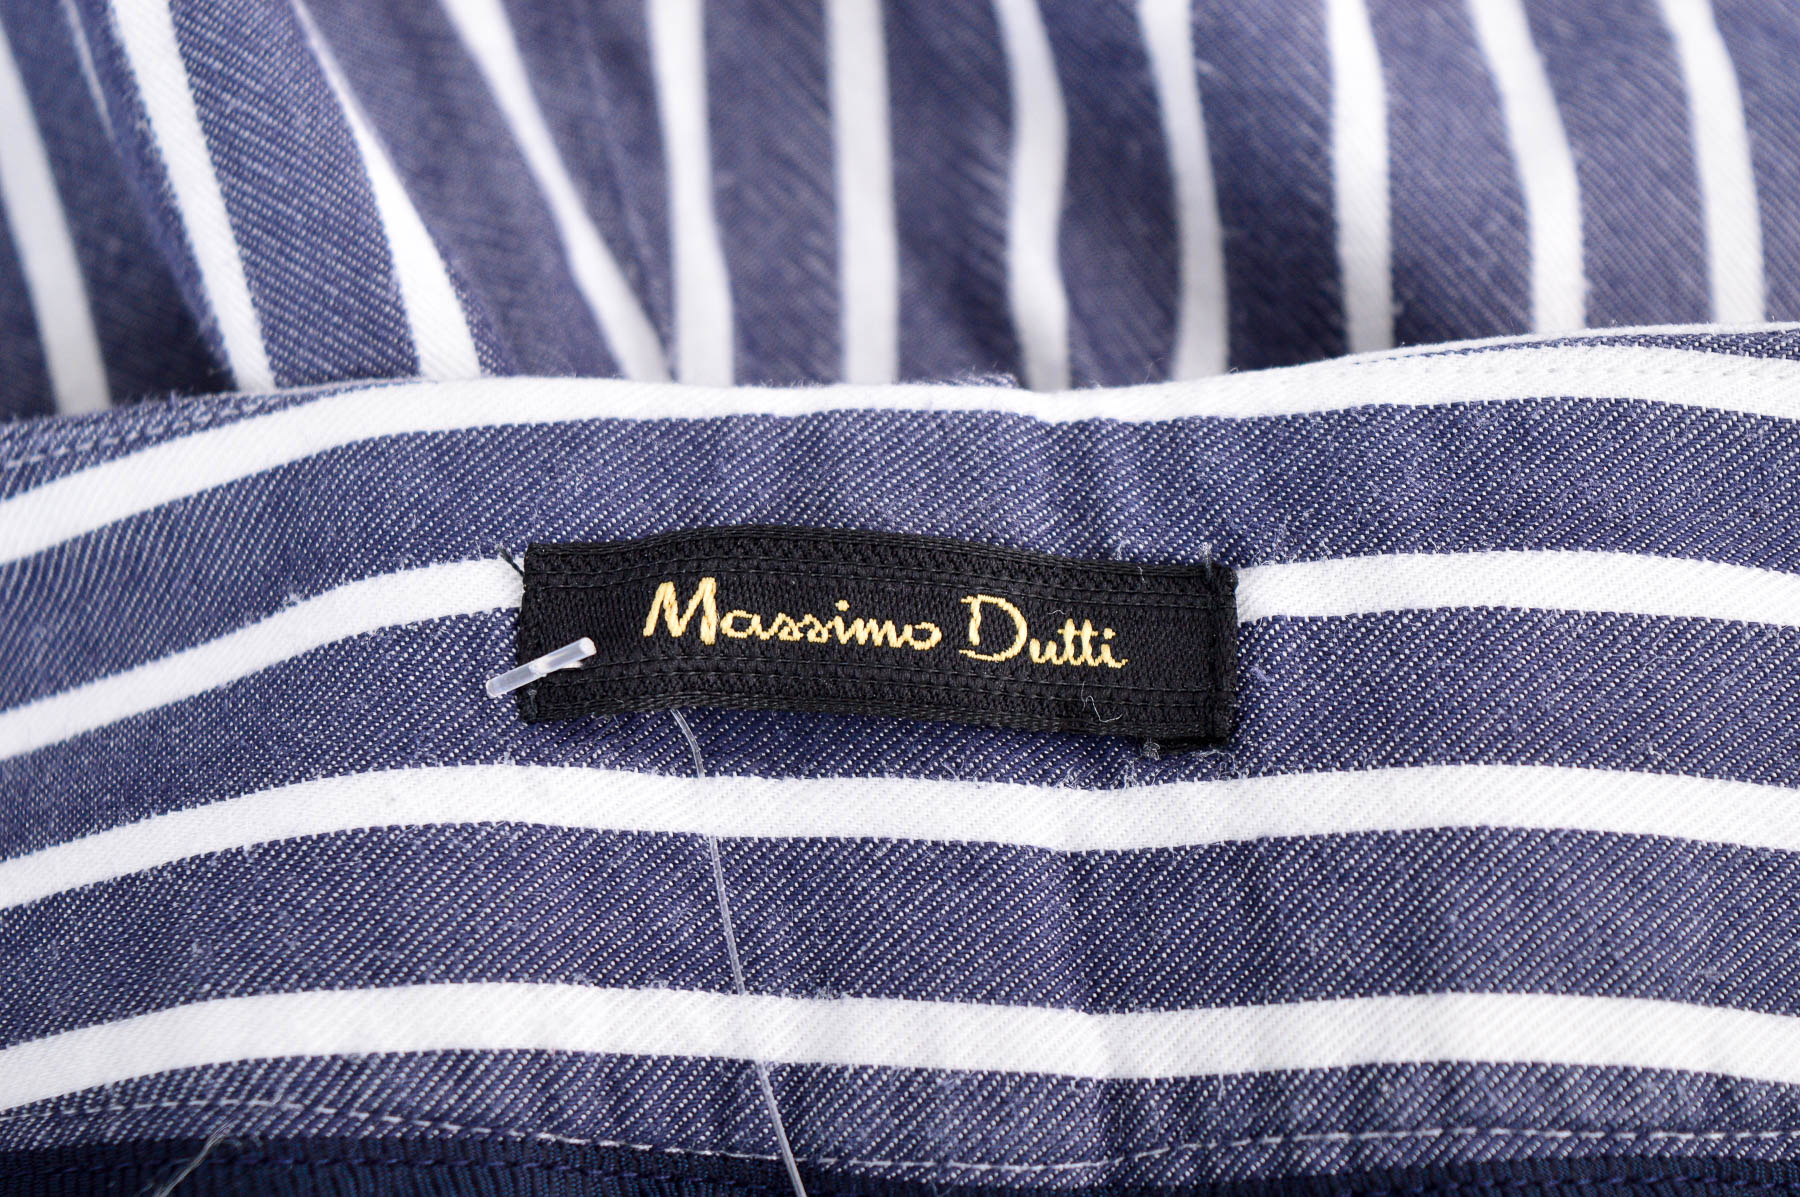 Women's trousers - Massimo Dutti - 2